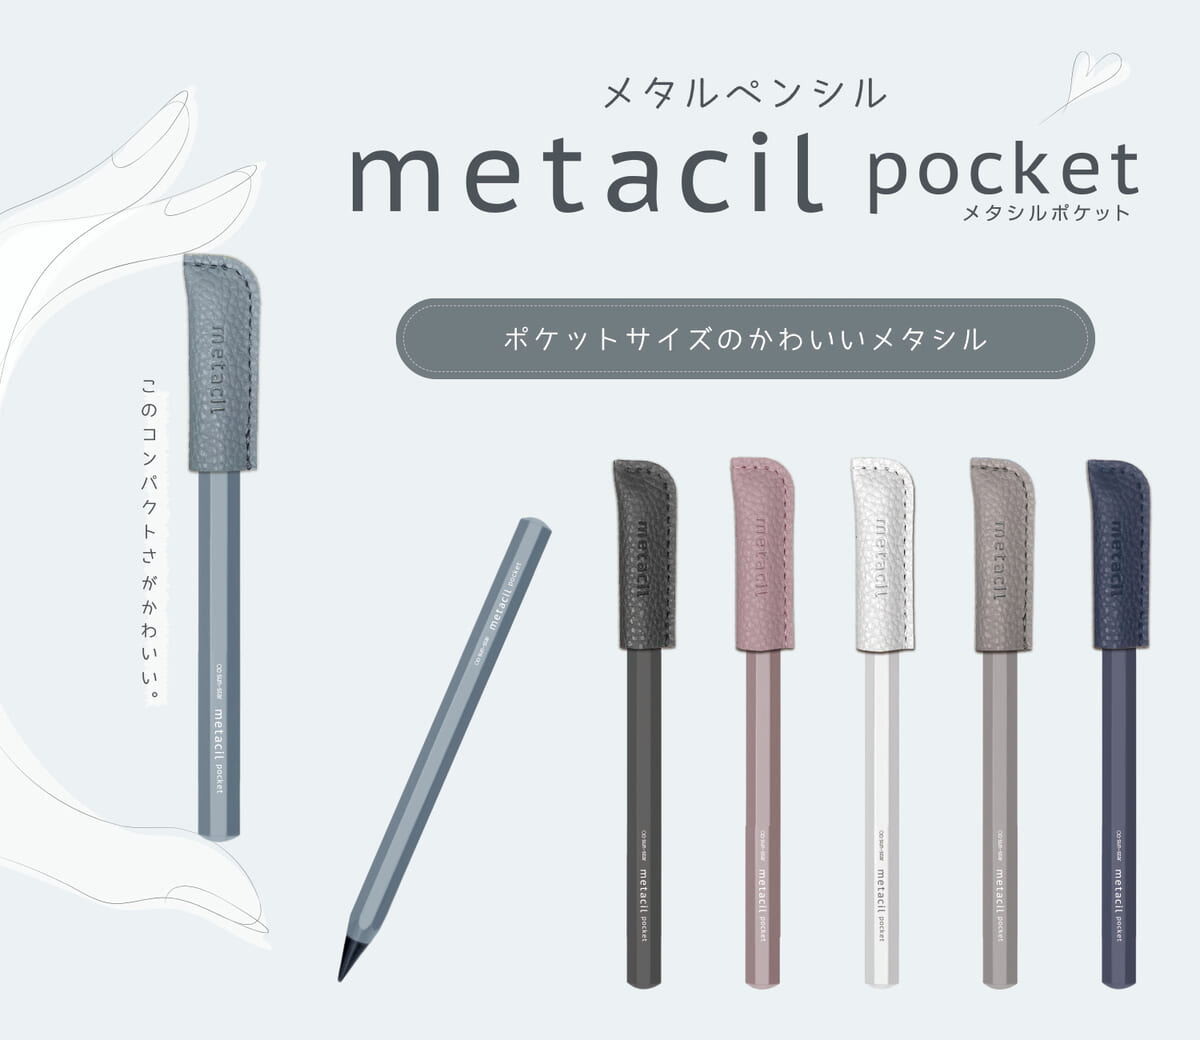 Sun-Star Metal Pencil (Metacil) Refills – Everything Calligraphy